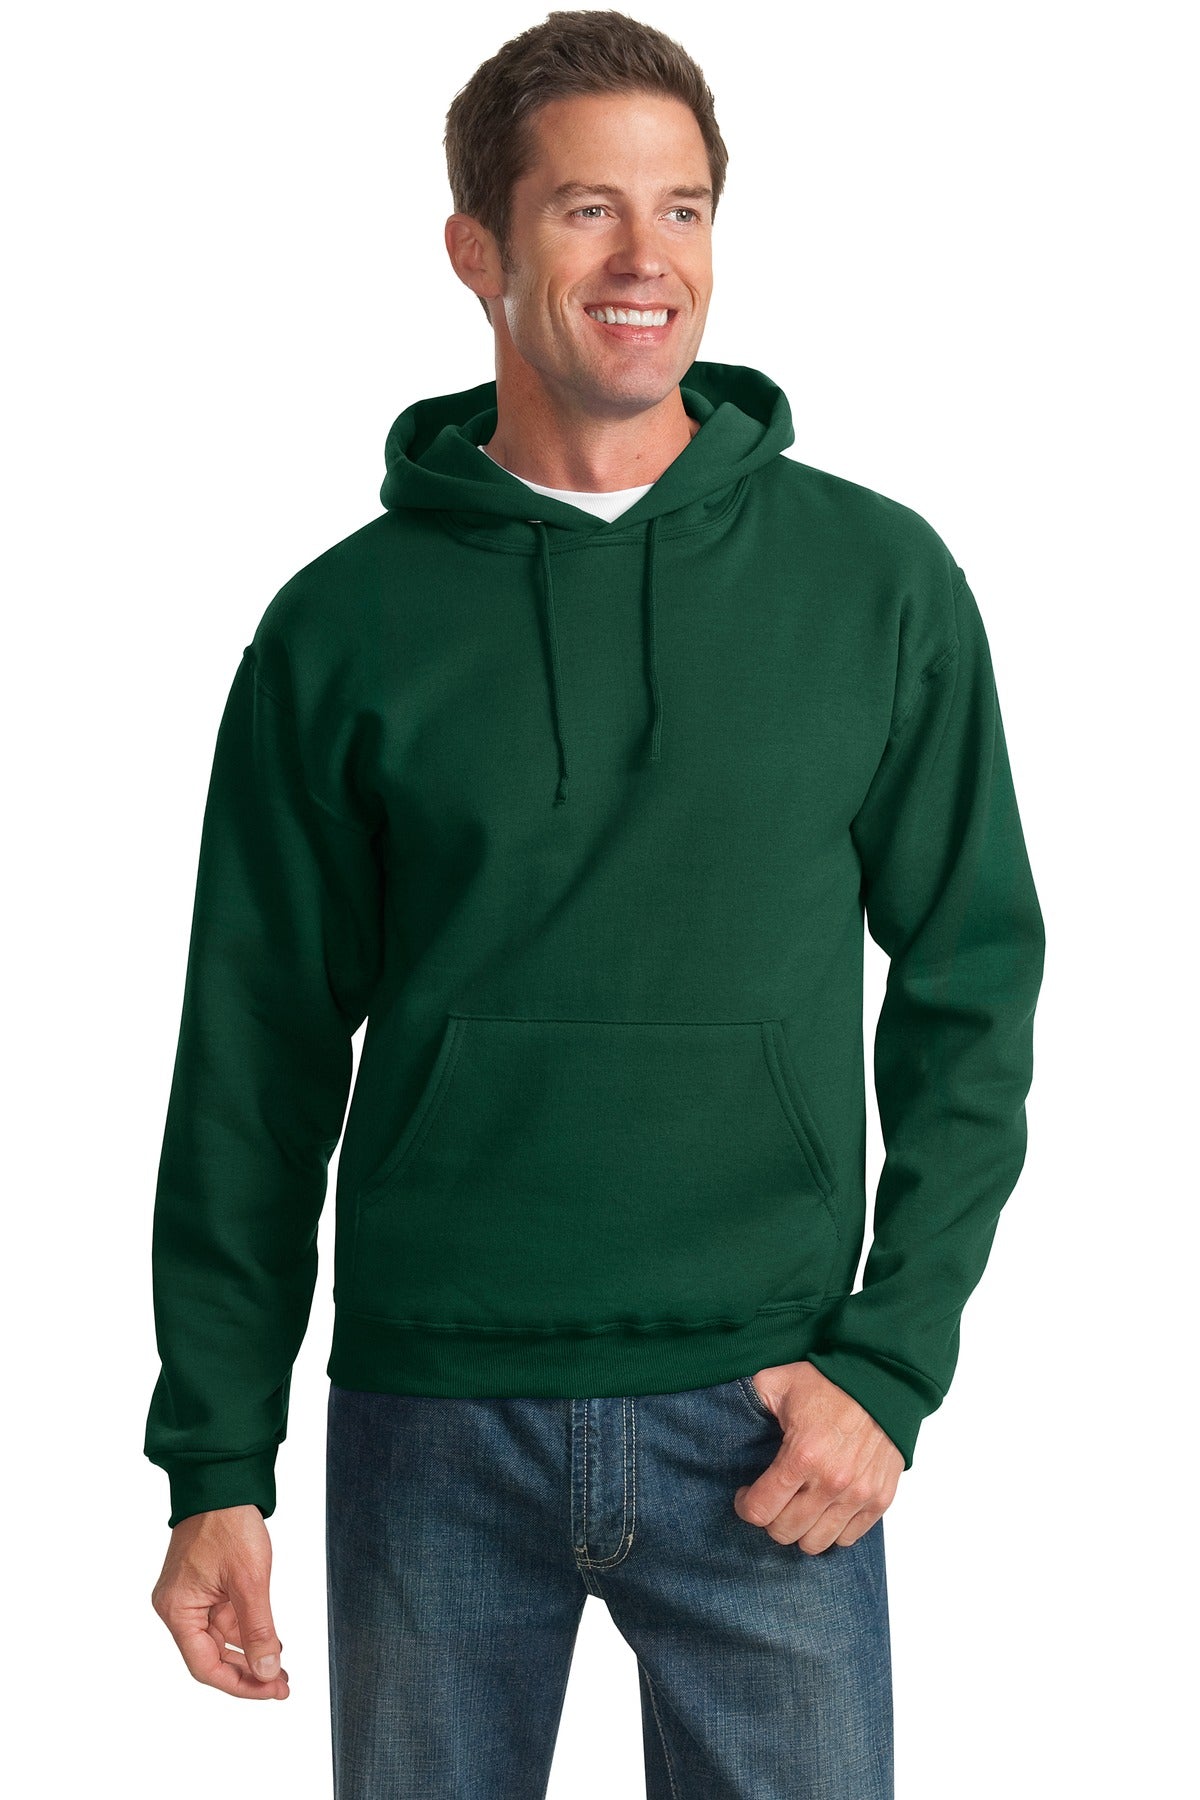 JERZEES® - NuBlend® Pullover Hooded Sweatshirt. 996M [Forest Green] - DFW Impression